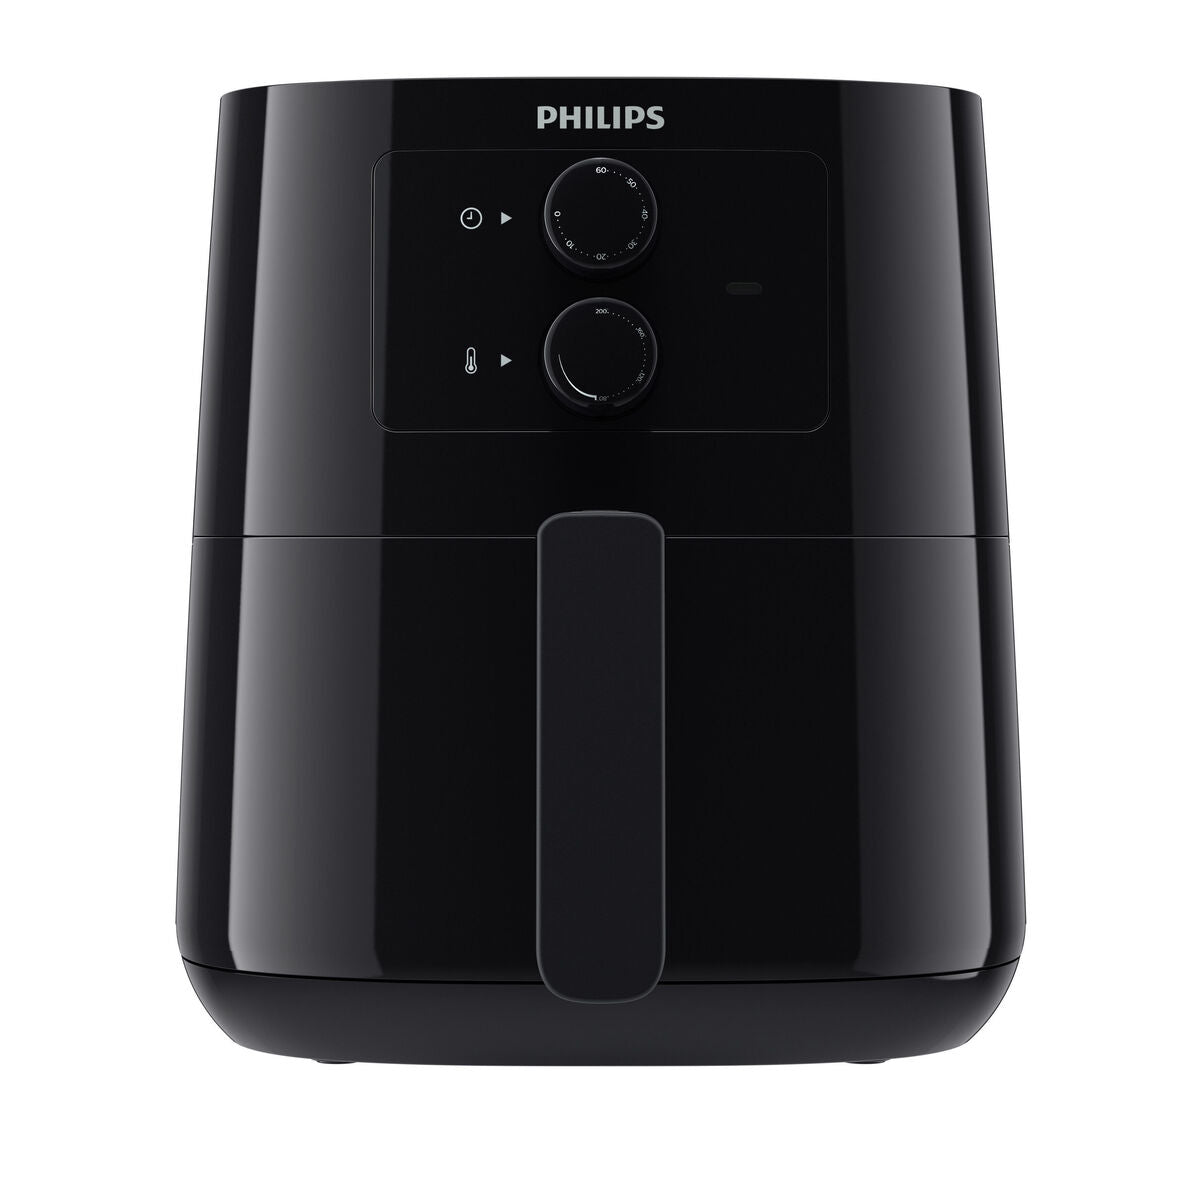 Kaufe Heißluftfritteuse Philips HD9200/90 Schwarz 1400 W bei AWK Flagship um € 129.00